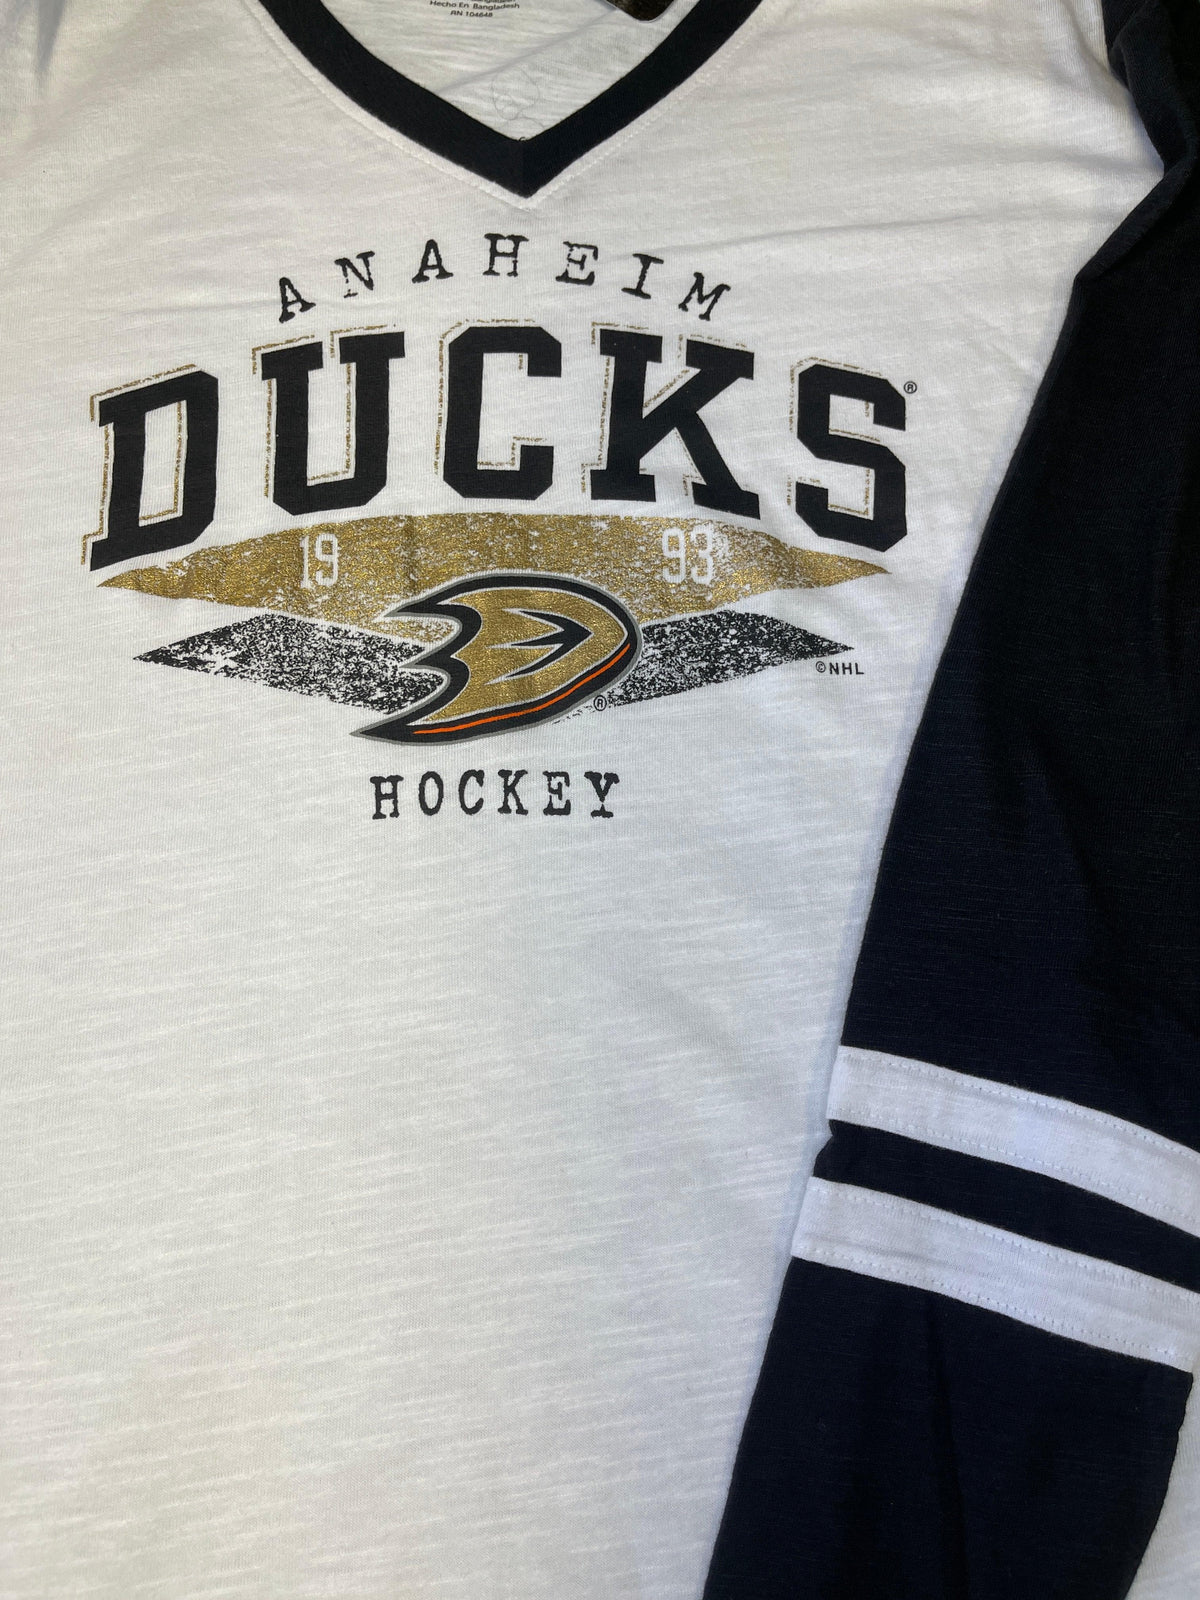 NHL Anaheim Ducks L/S V-Neck 100% Cotton T-Shirt Women's Large NWT